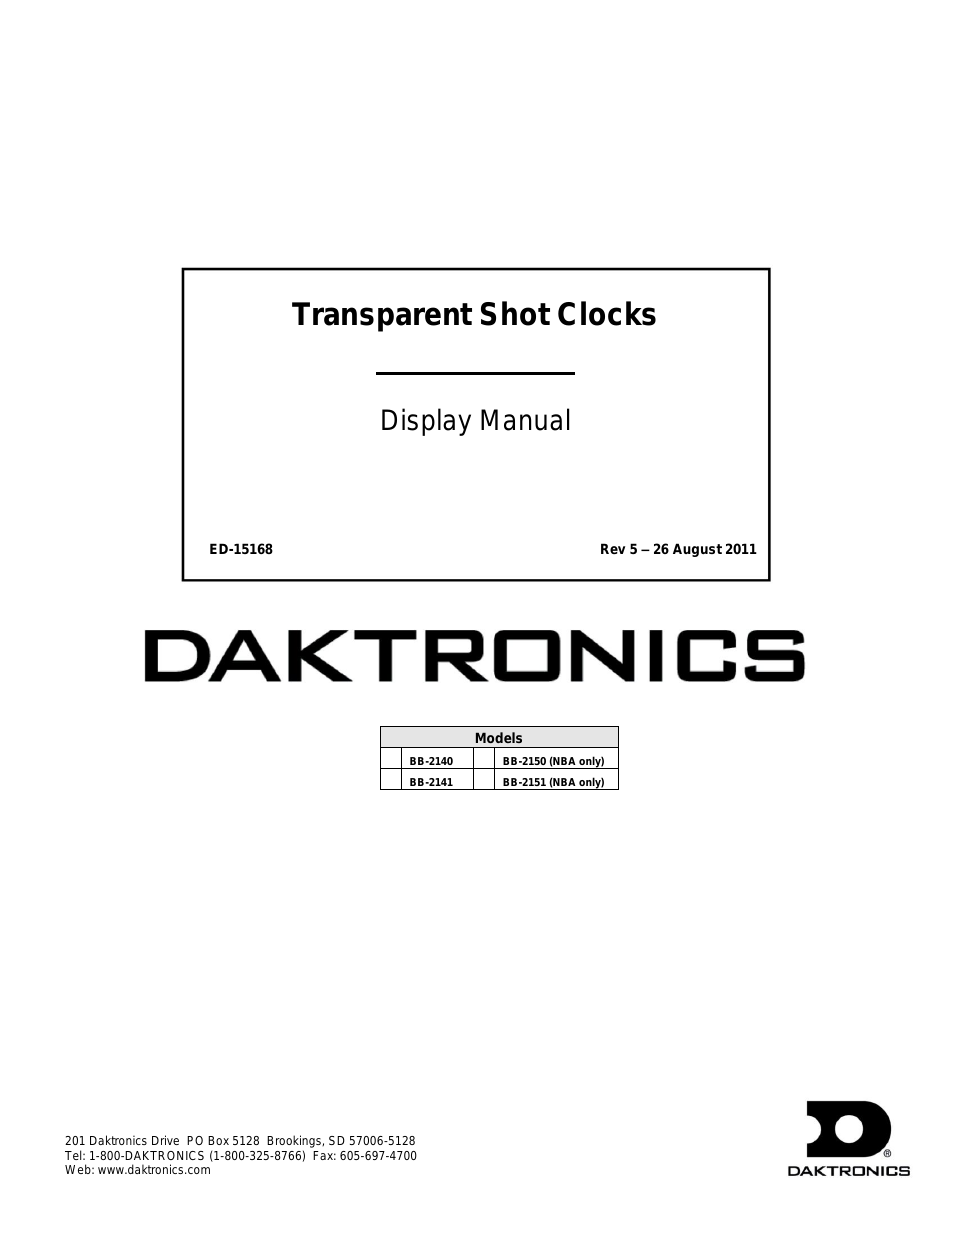 BB-2140 Transparent Shot Clock